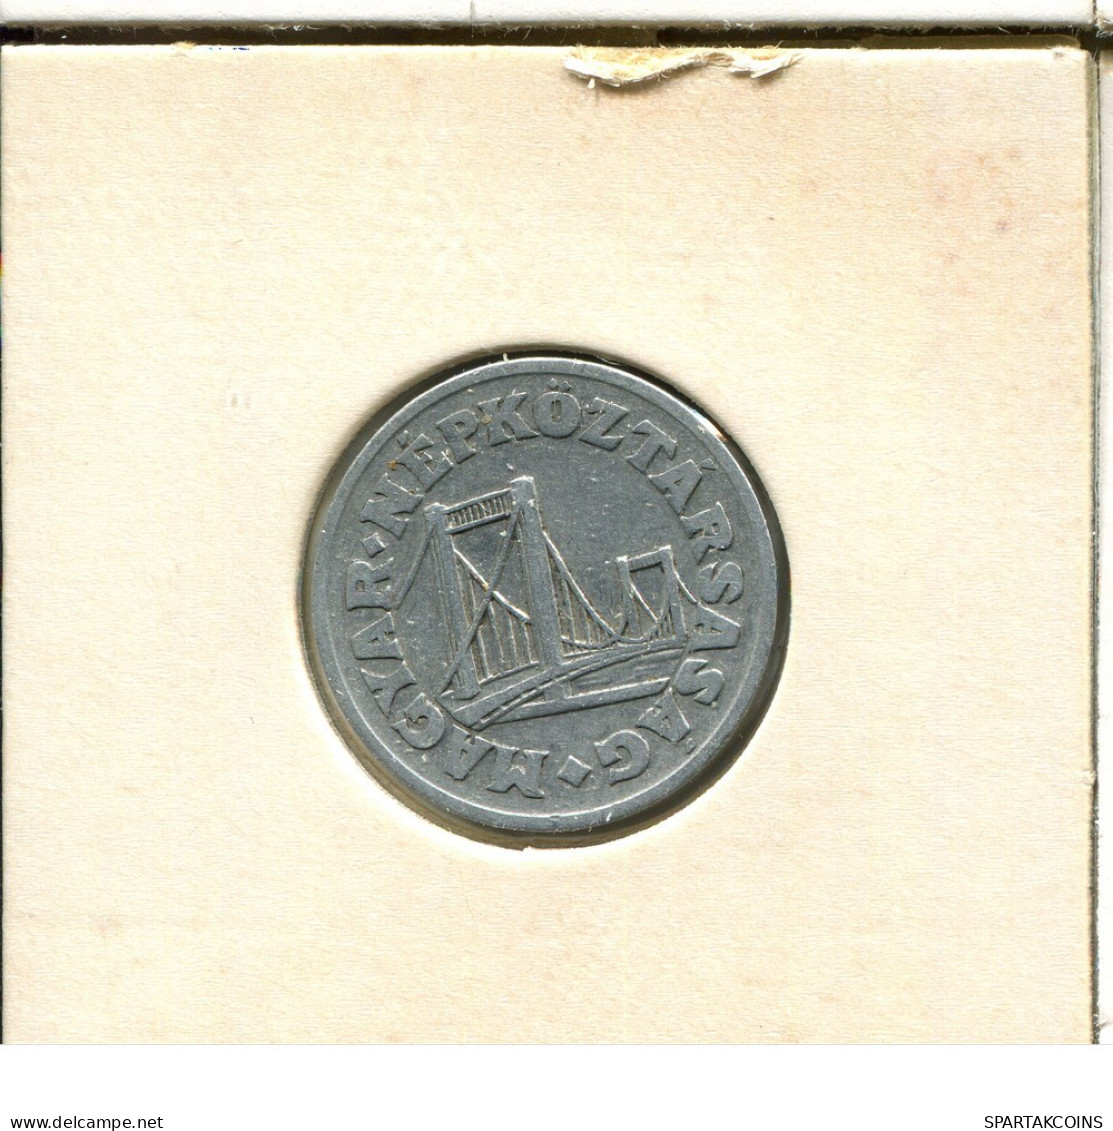 50 FILLER 1967 HUNGARY Coin #AS834.U.A - Hongrie